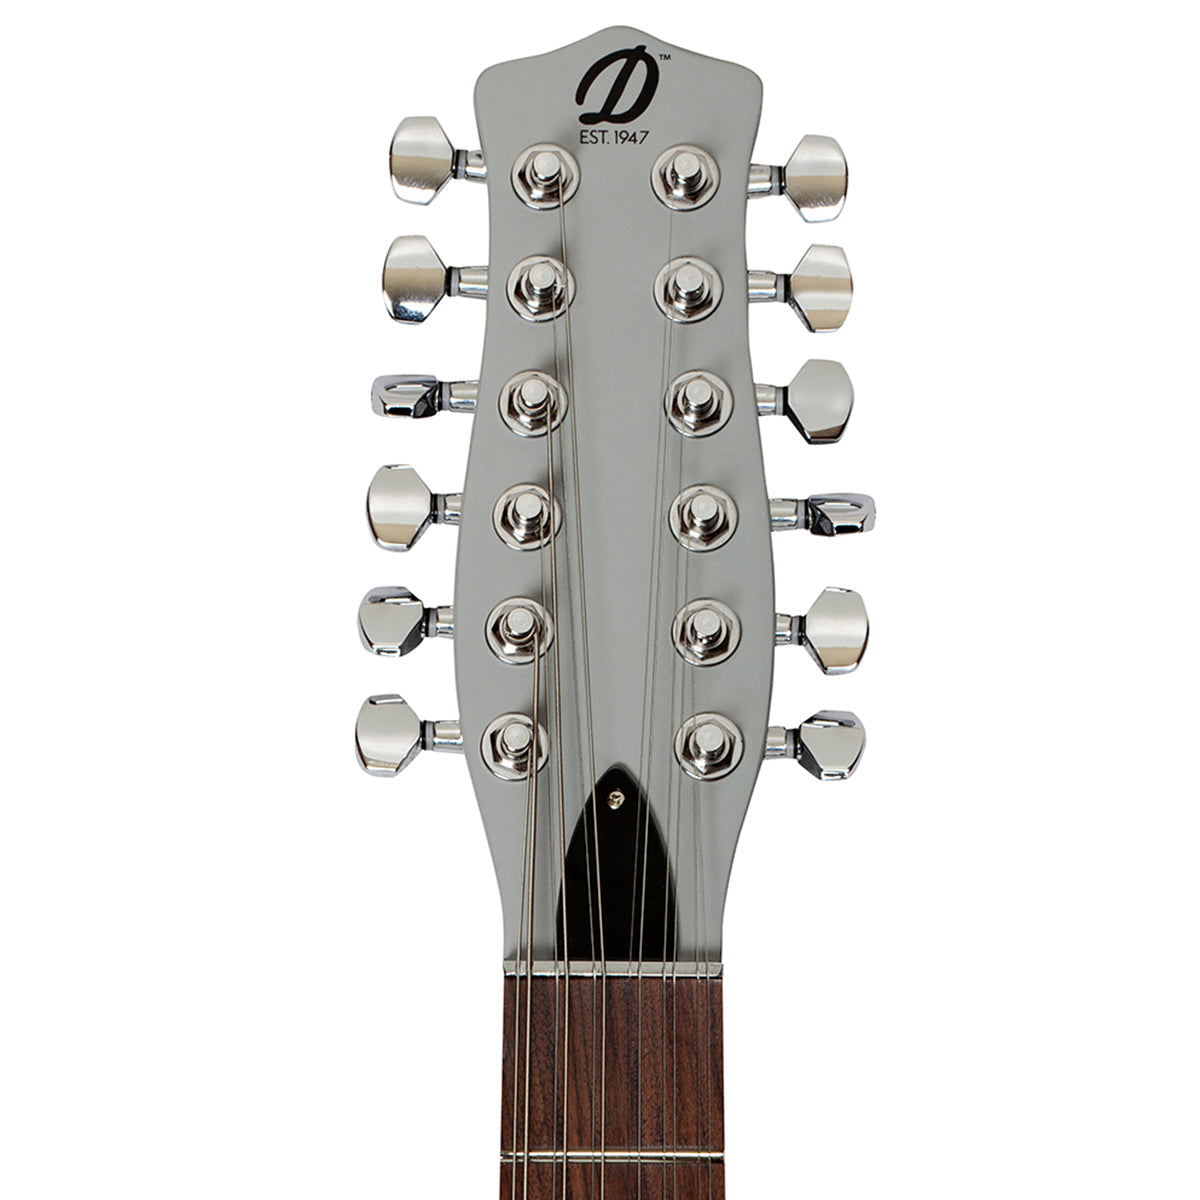 Danelectro '59X 12 String Electric Guitar ~ Ice Grey, 12 String Electric Guitars for sale at Richards Guitars.